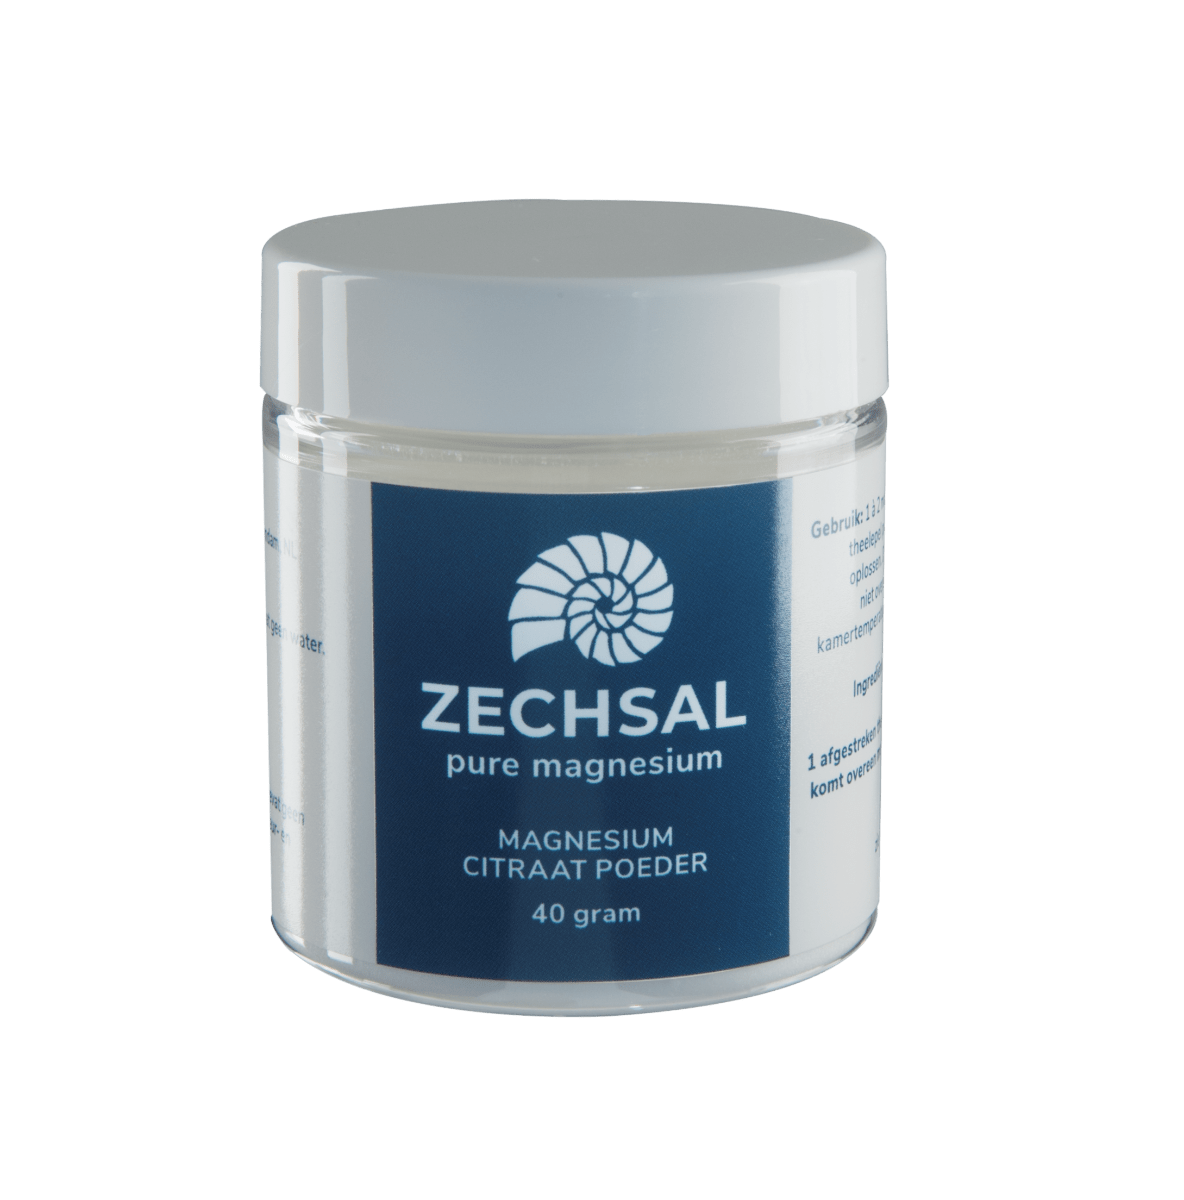 magnesiumcitrate powder 40 g. Zechsal